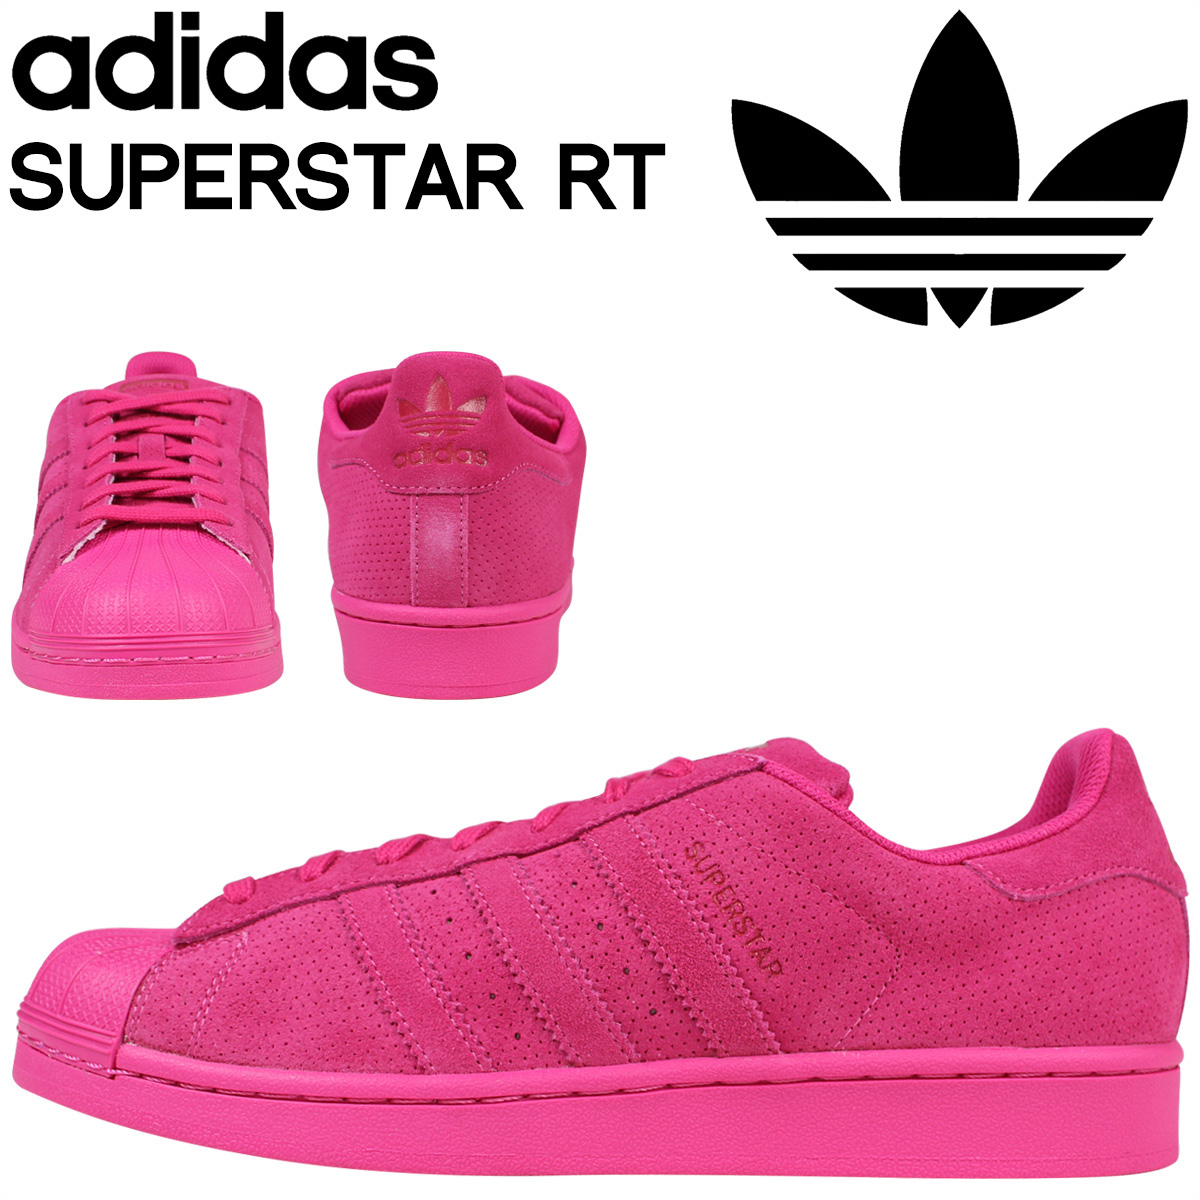 adidas superstar pink